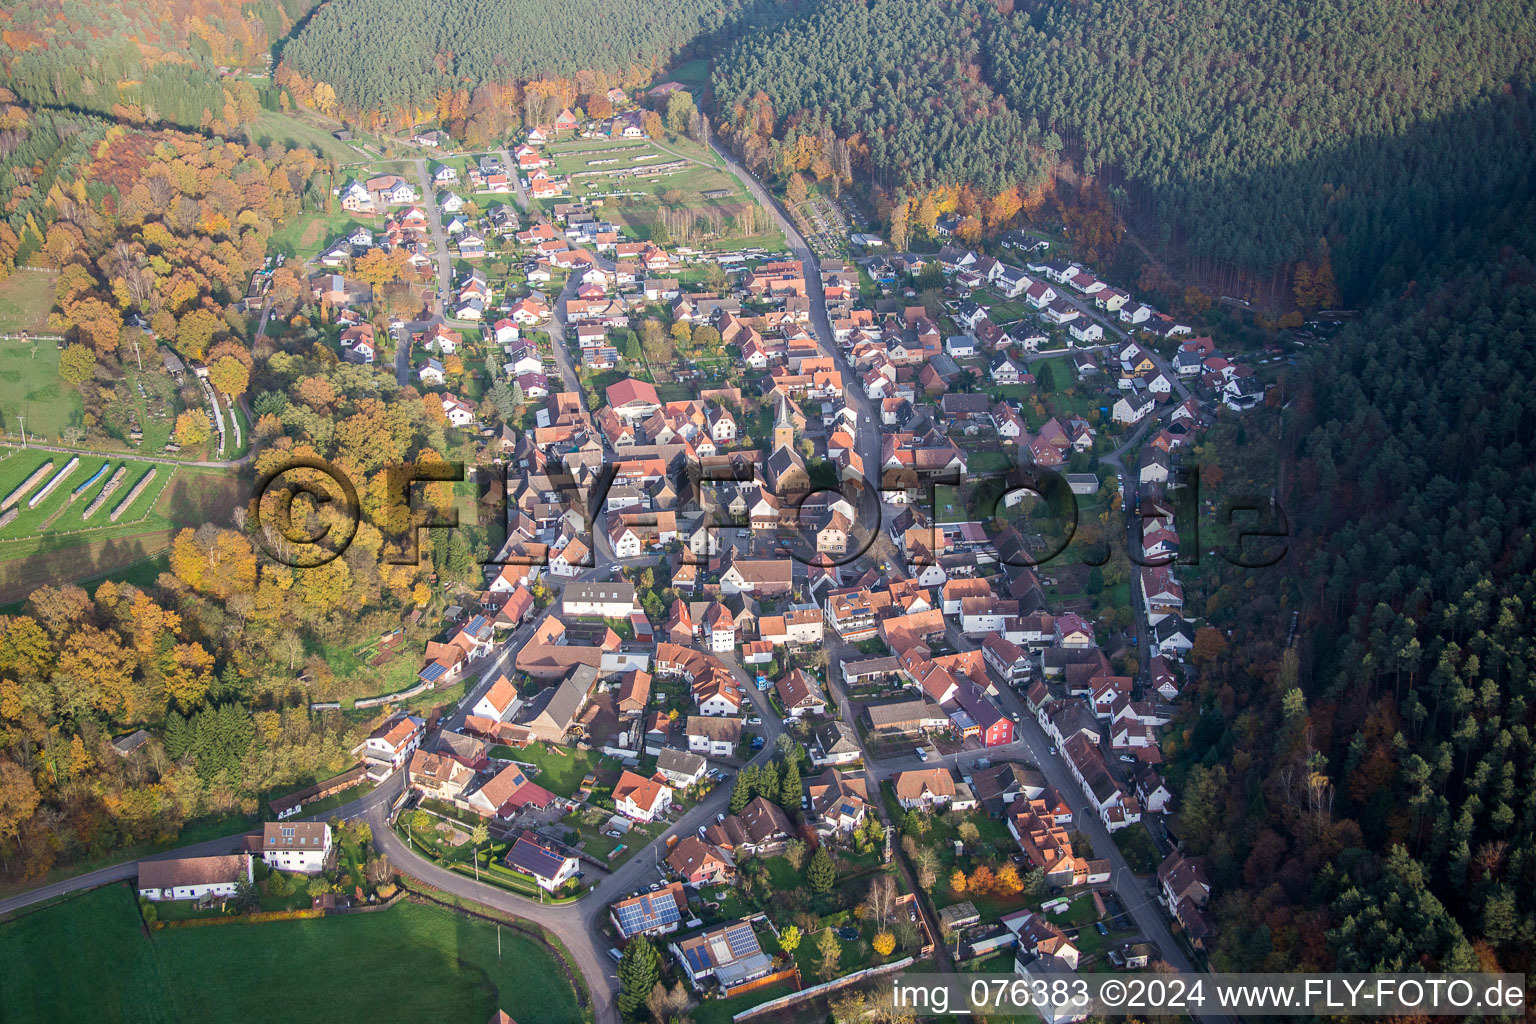 Village view in Vorderweidenthal in the state Rhineland-Palatinate, Germany